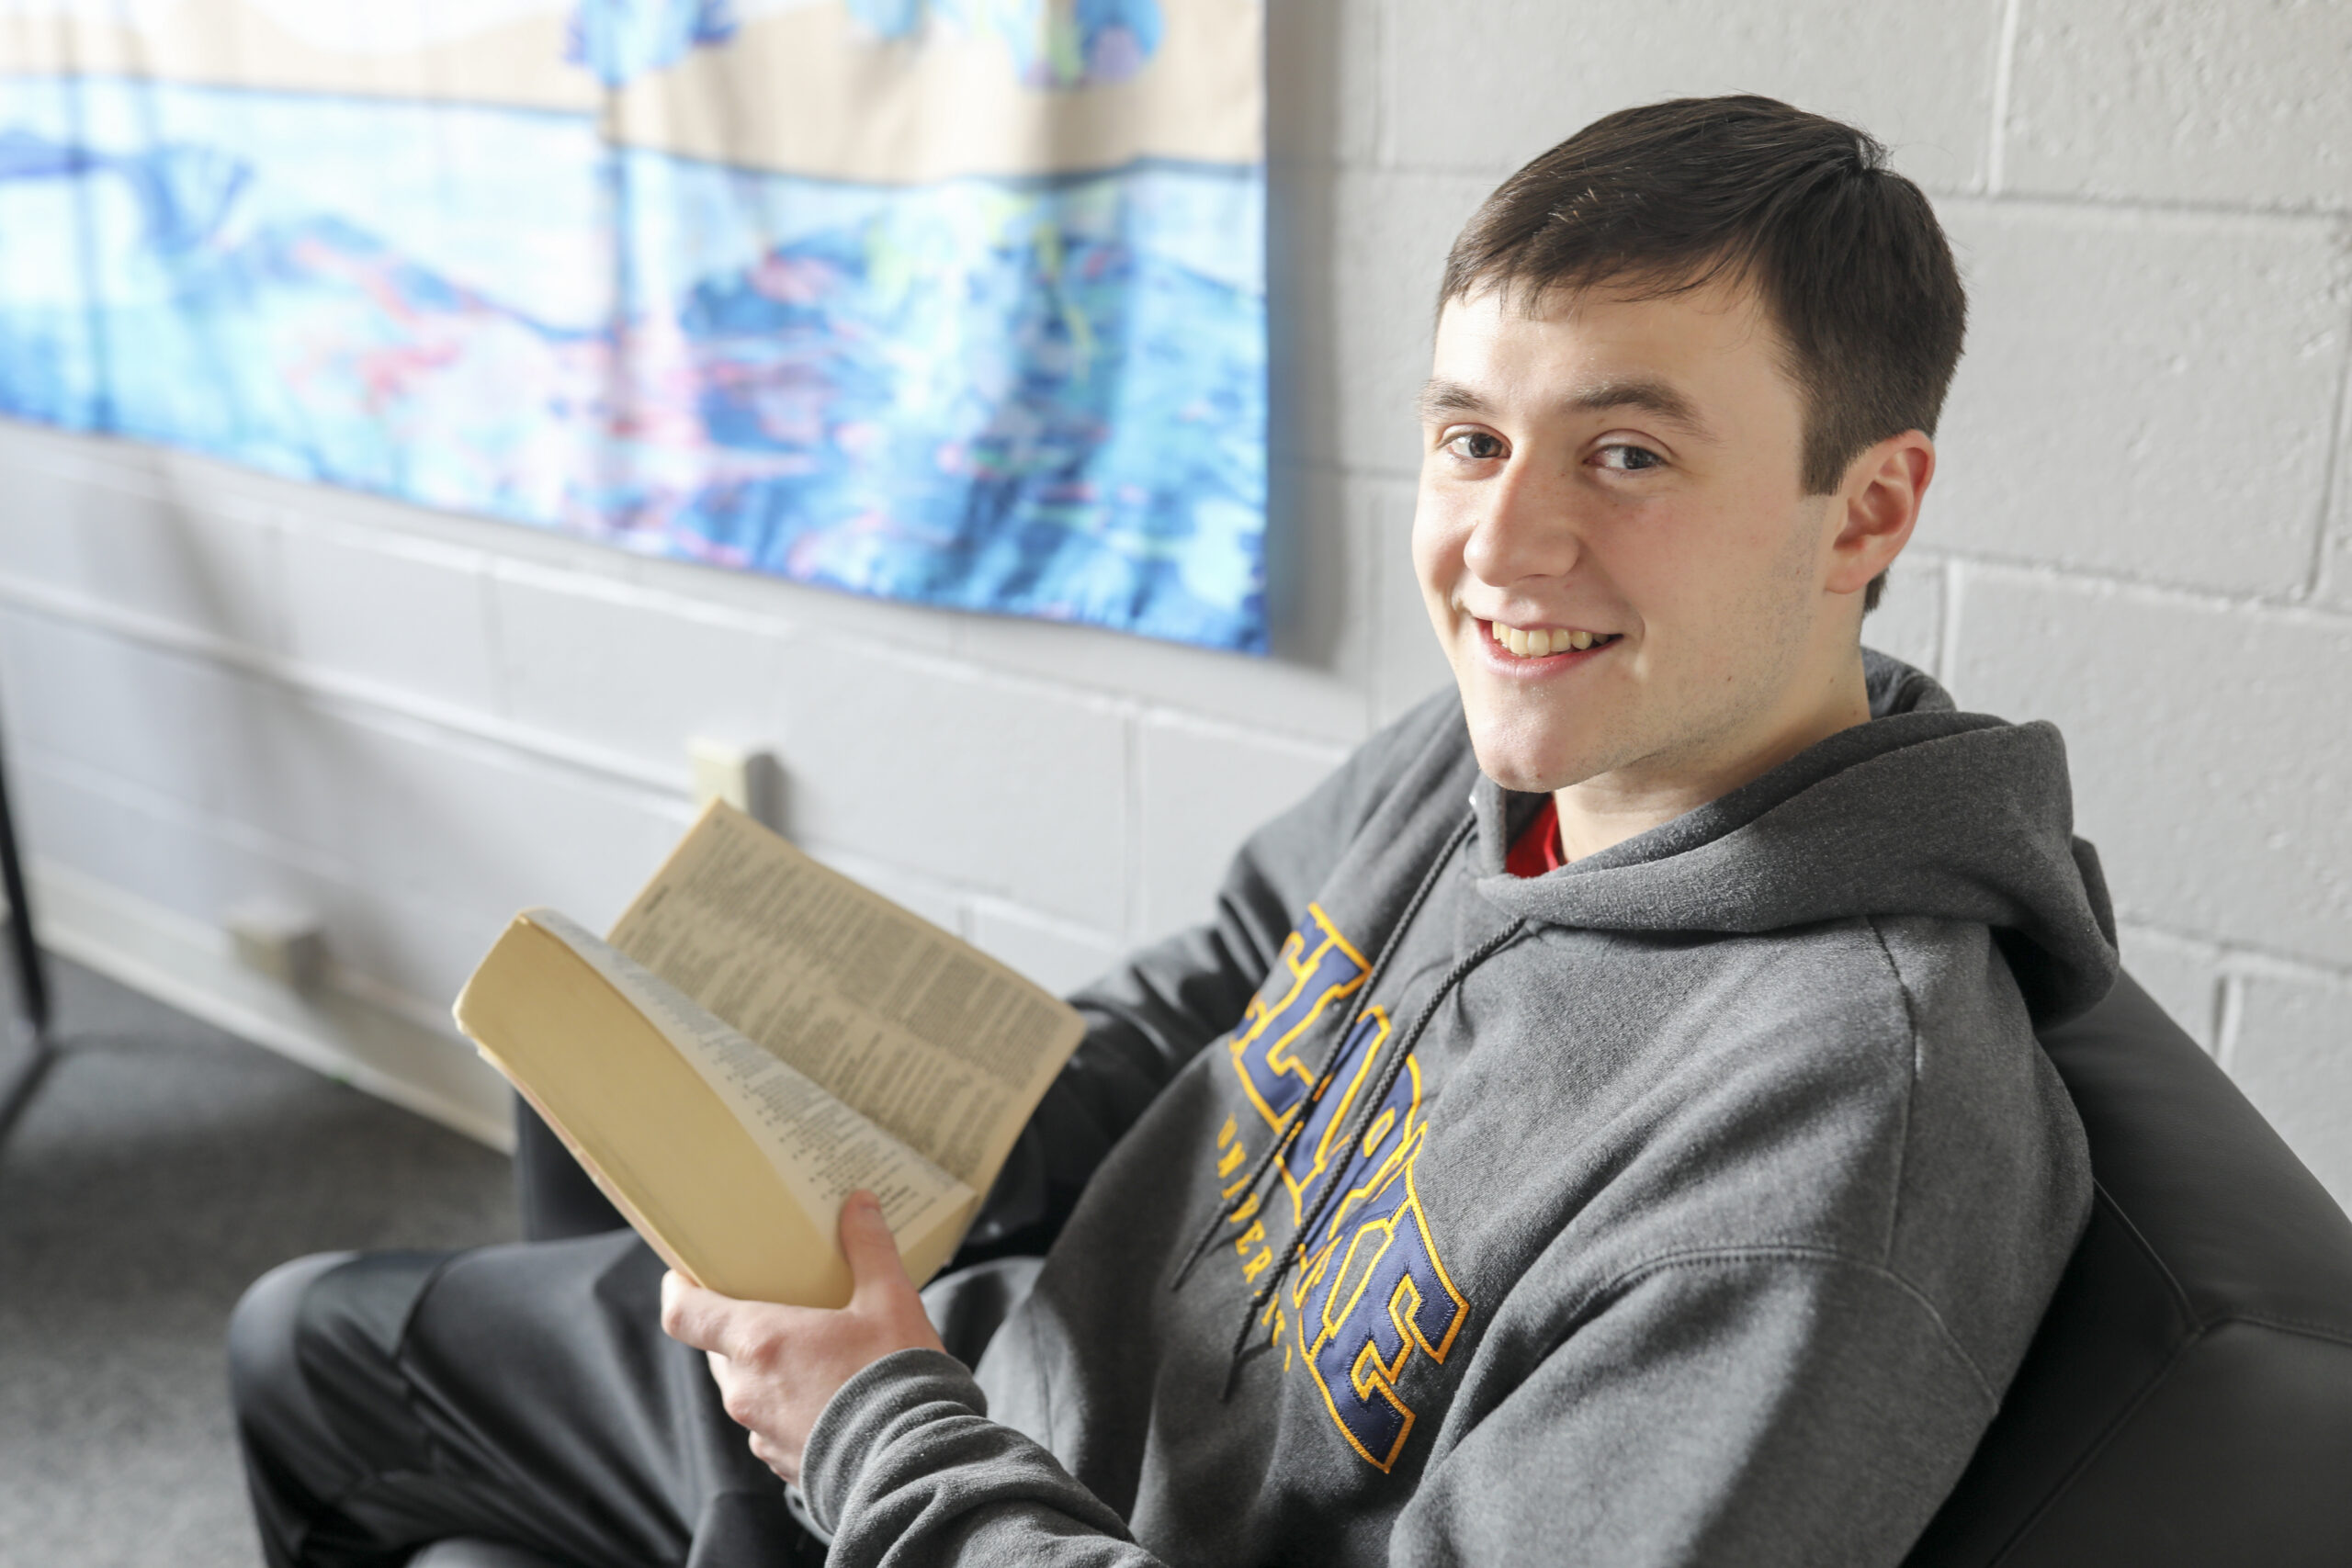 Clarke University Student reading on campus.